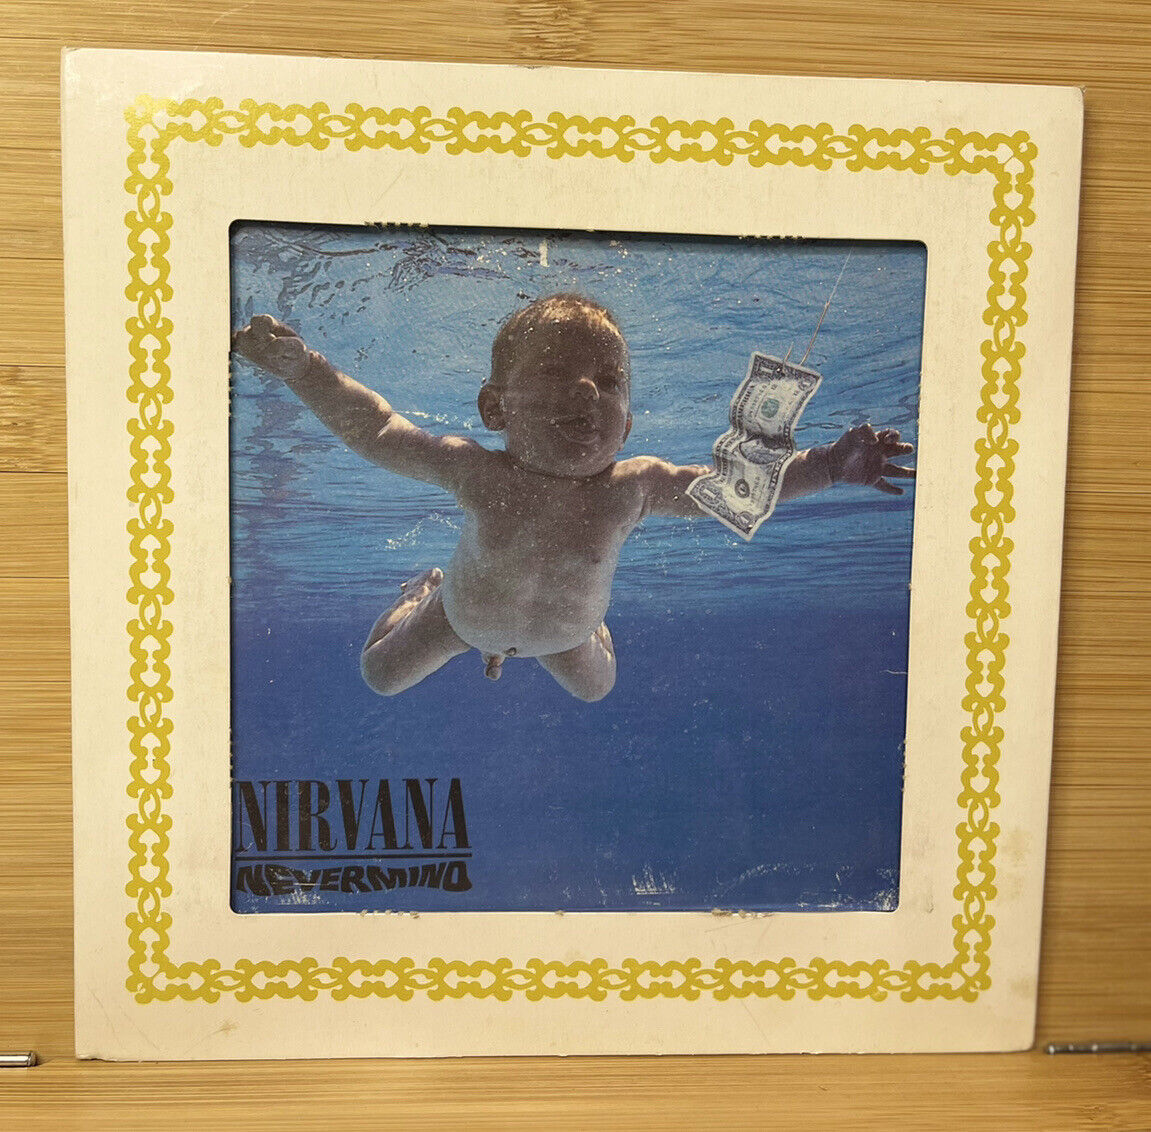 Nirvana - Nevermind 90s Vintage Cocaine Mirror Carnival Prize Grunge Alternative